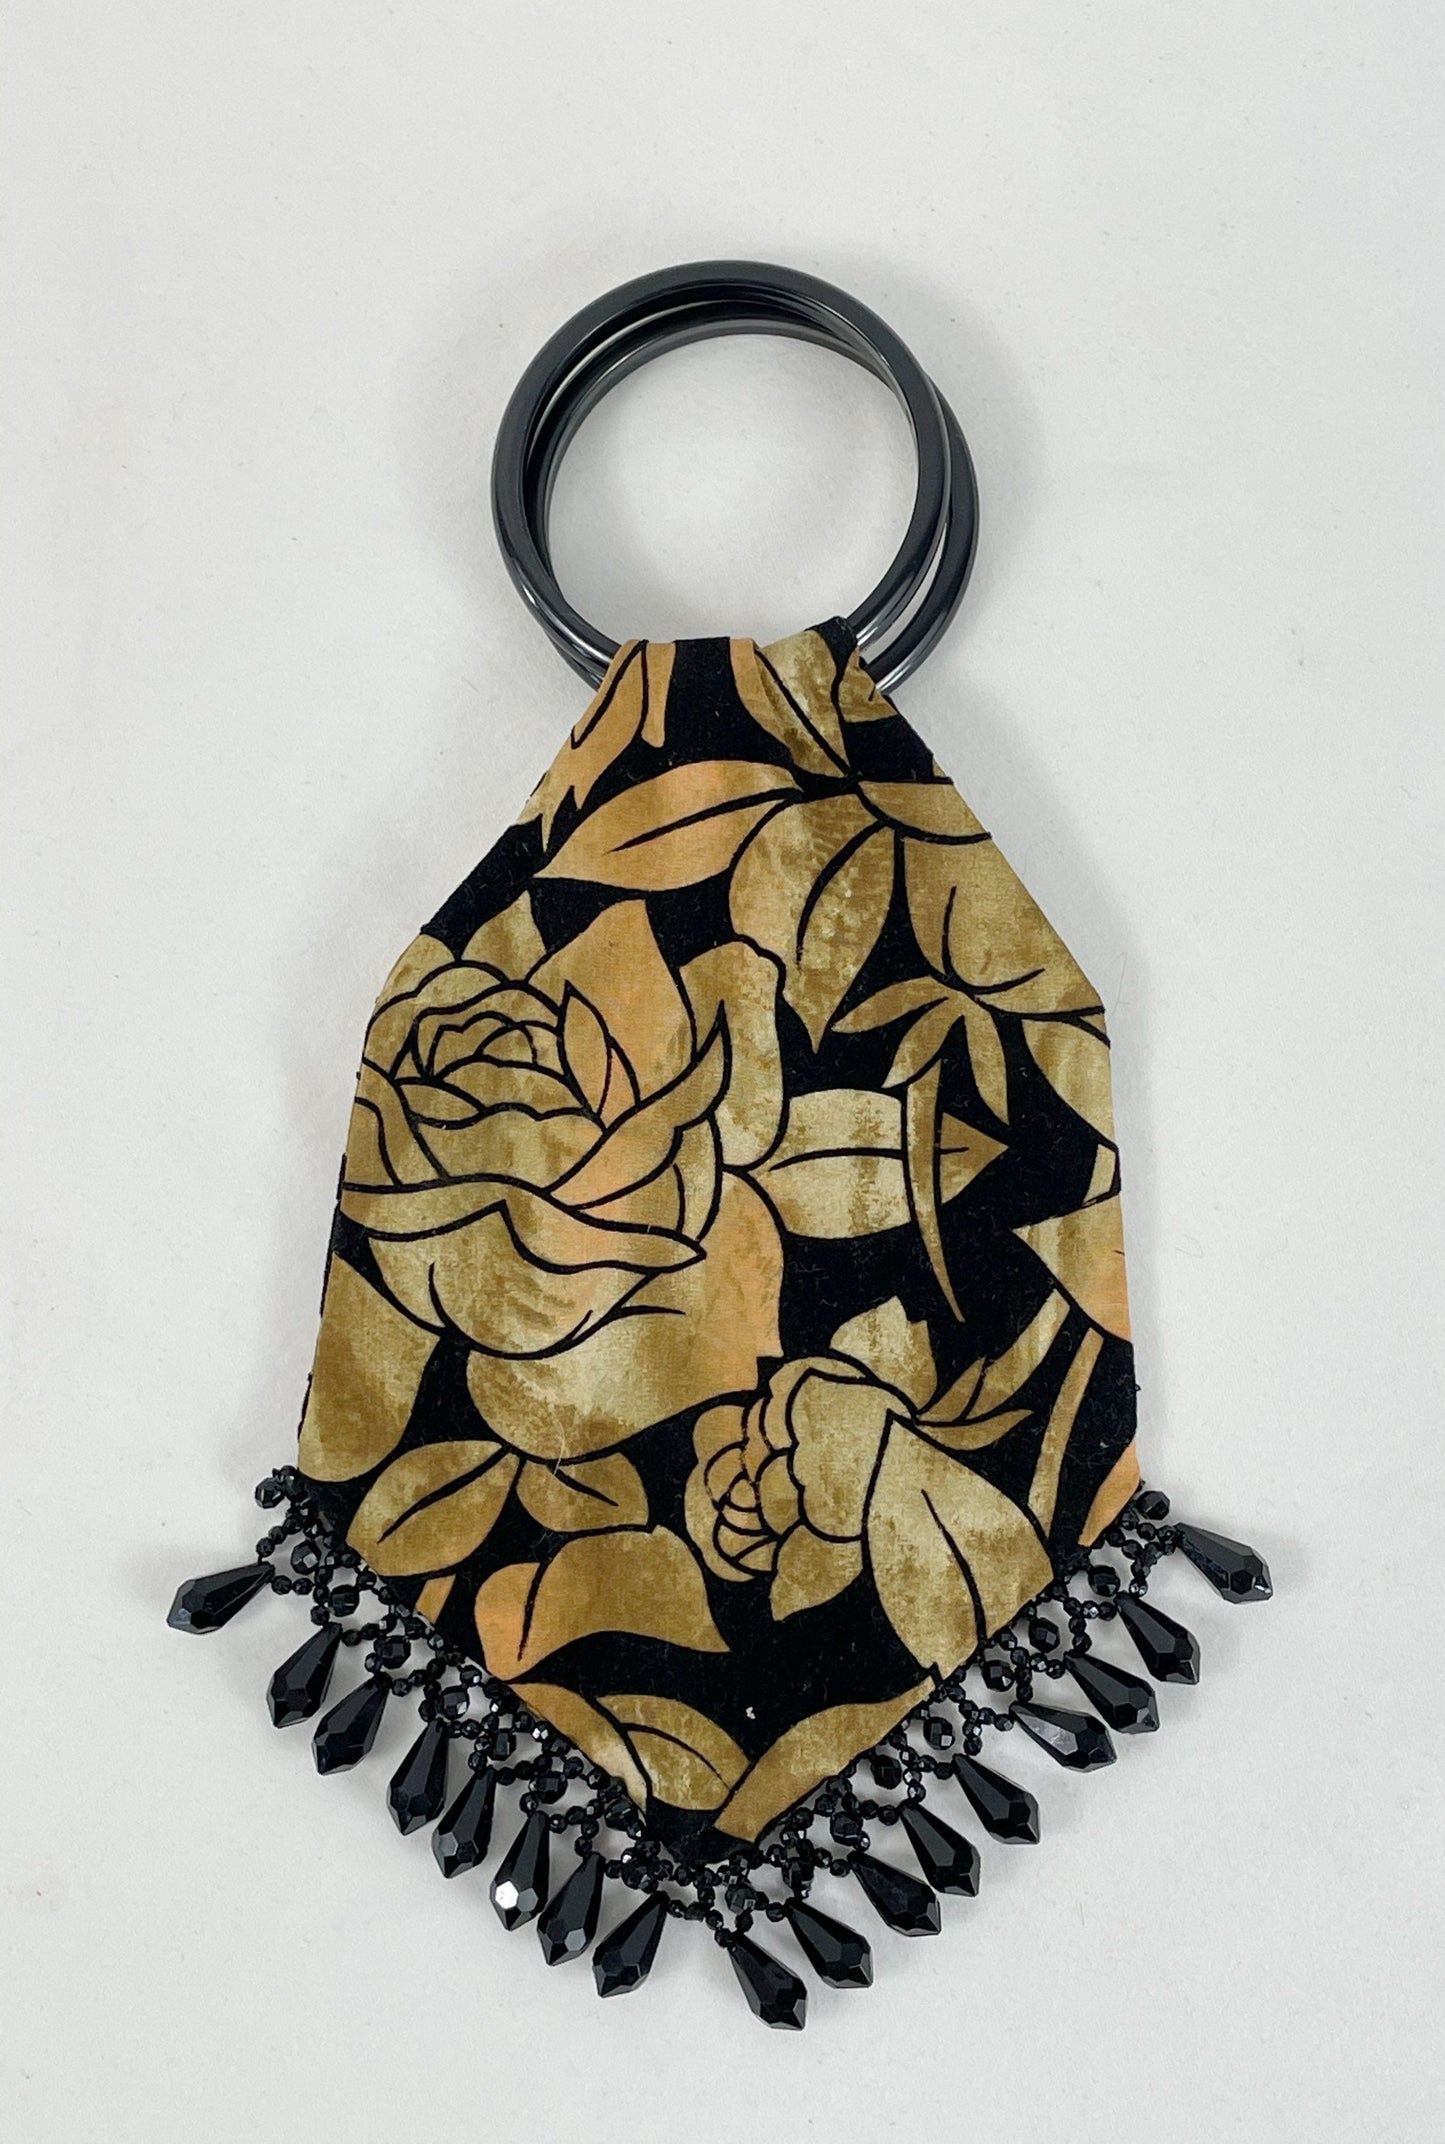 1960s velvet pouch purse evening bag with beaded tassels black gold roses